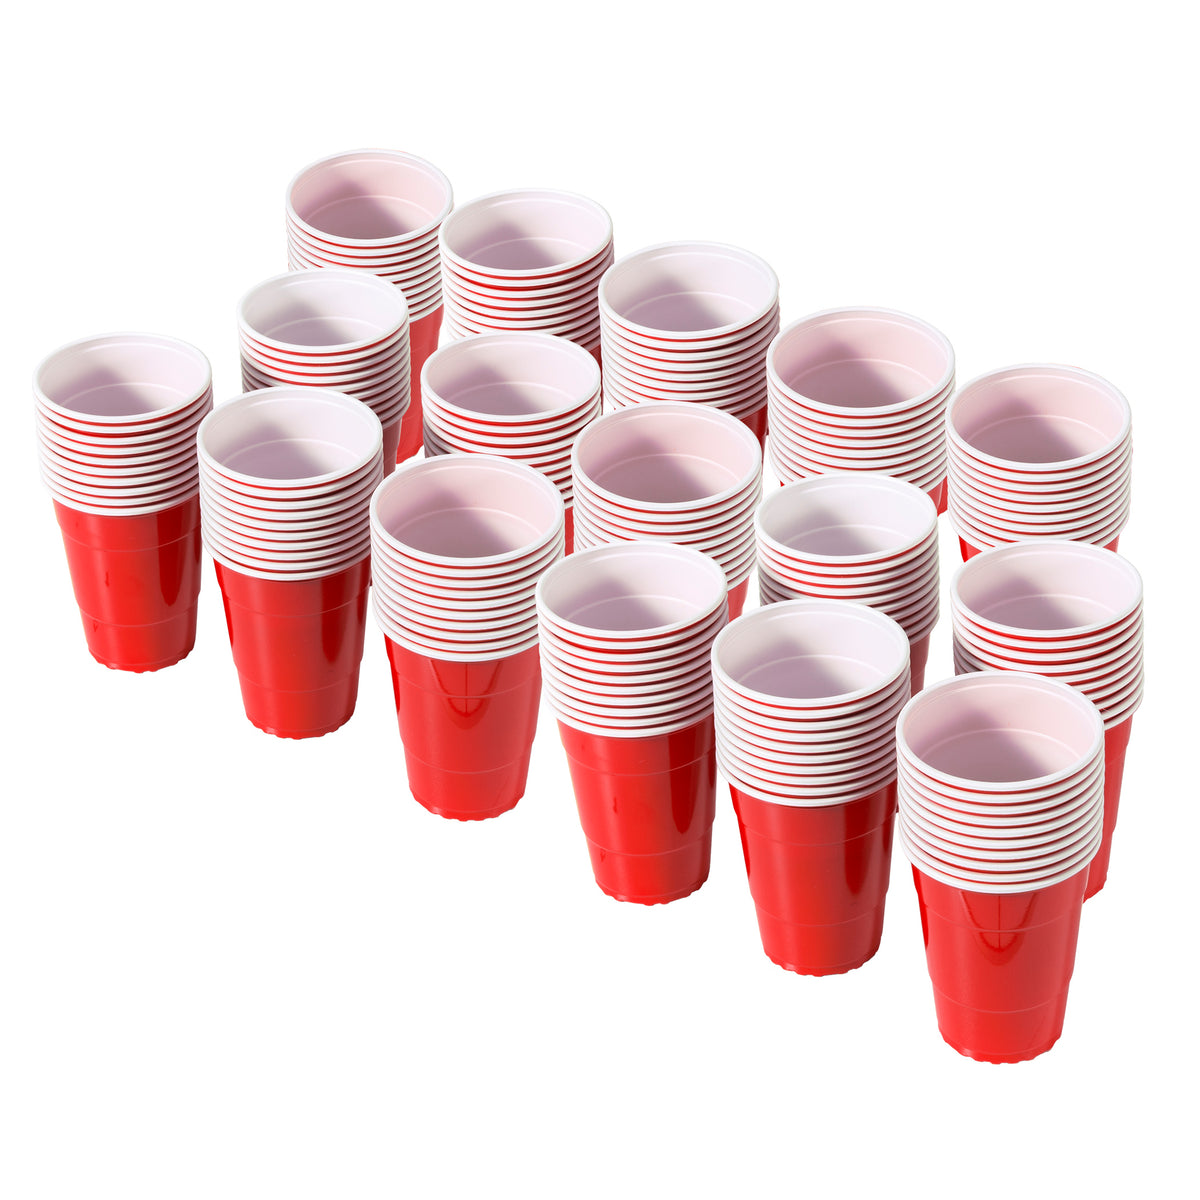 Doe het niet Ale omverwerping GoPong 6oz Red Party Cups - 16-Pack